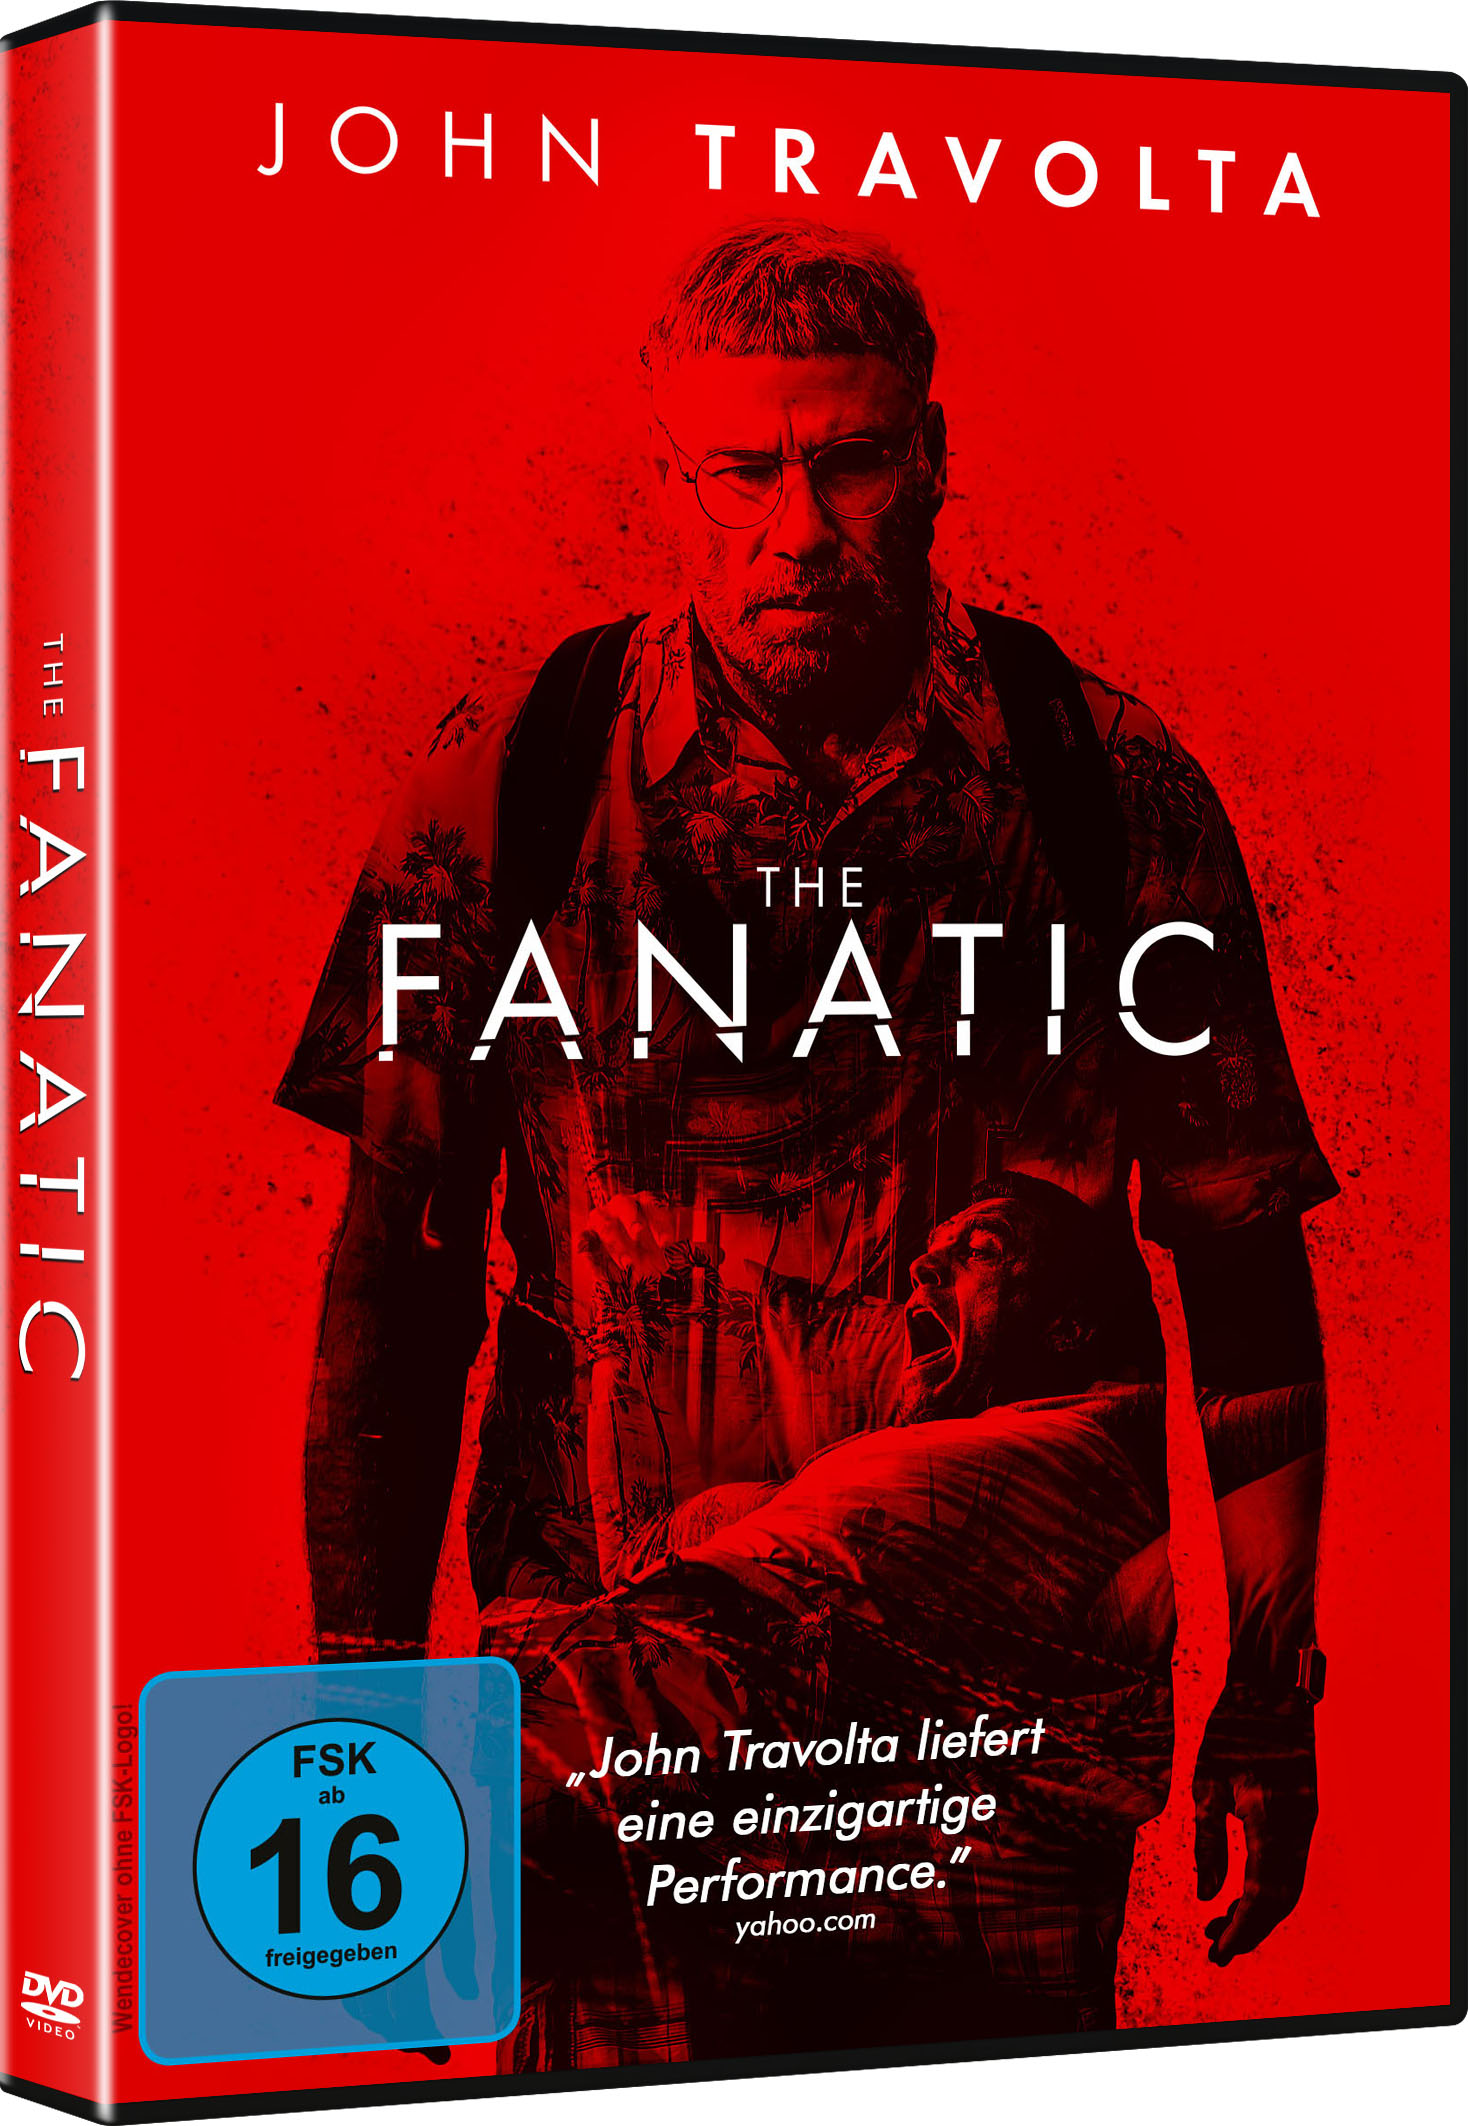 The Fanatic (DVD)  Image 2